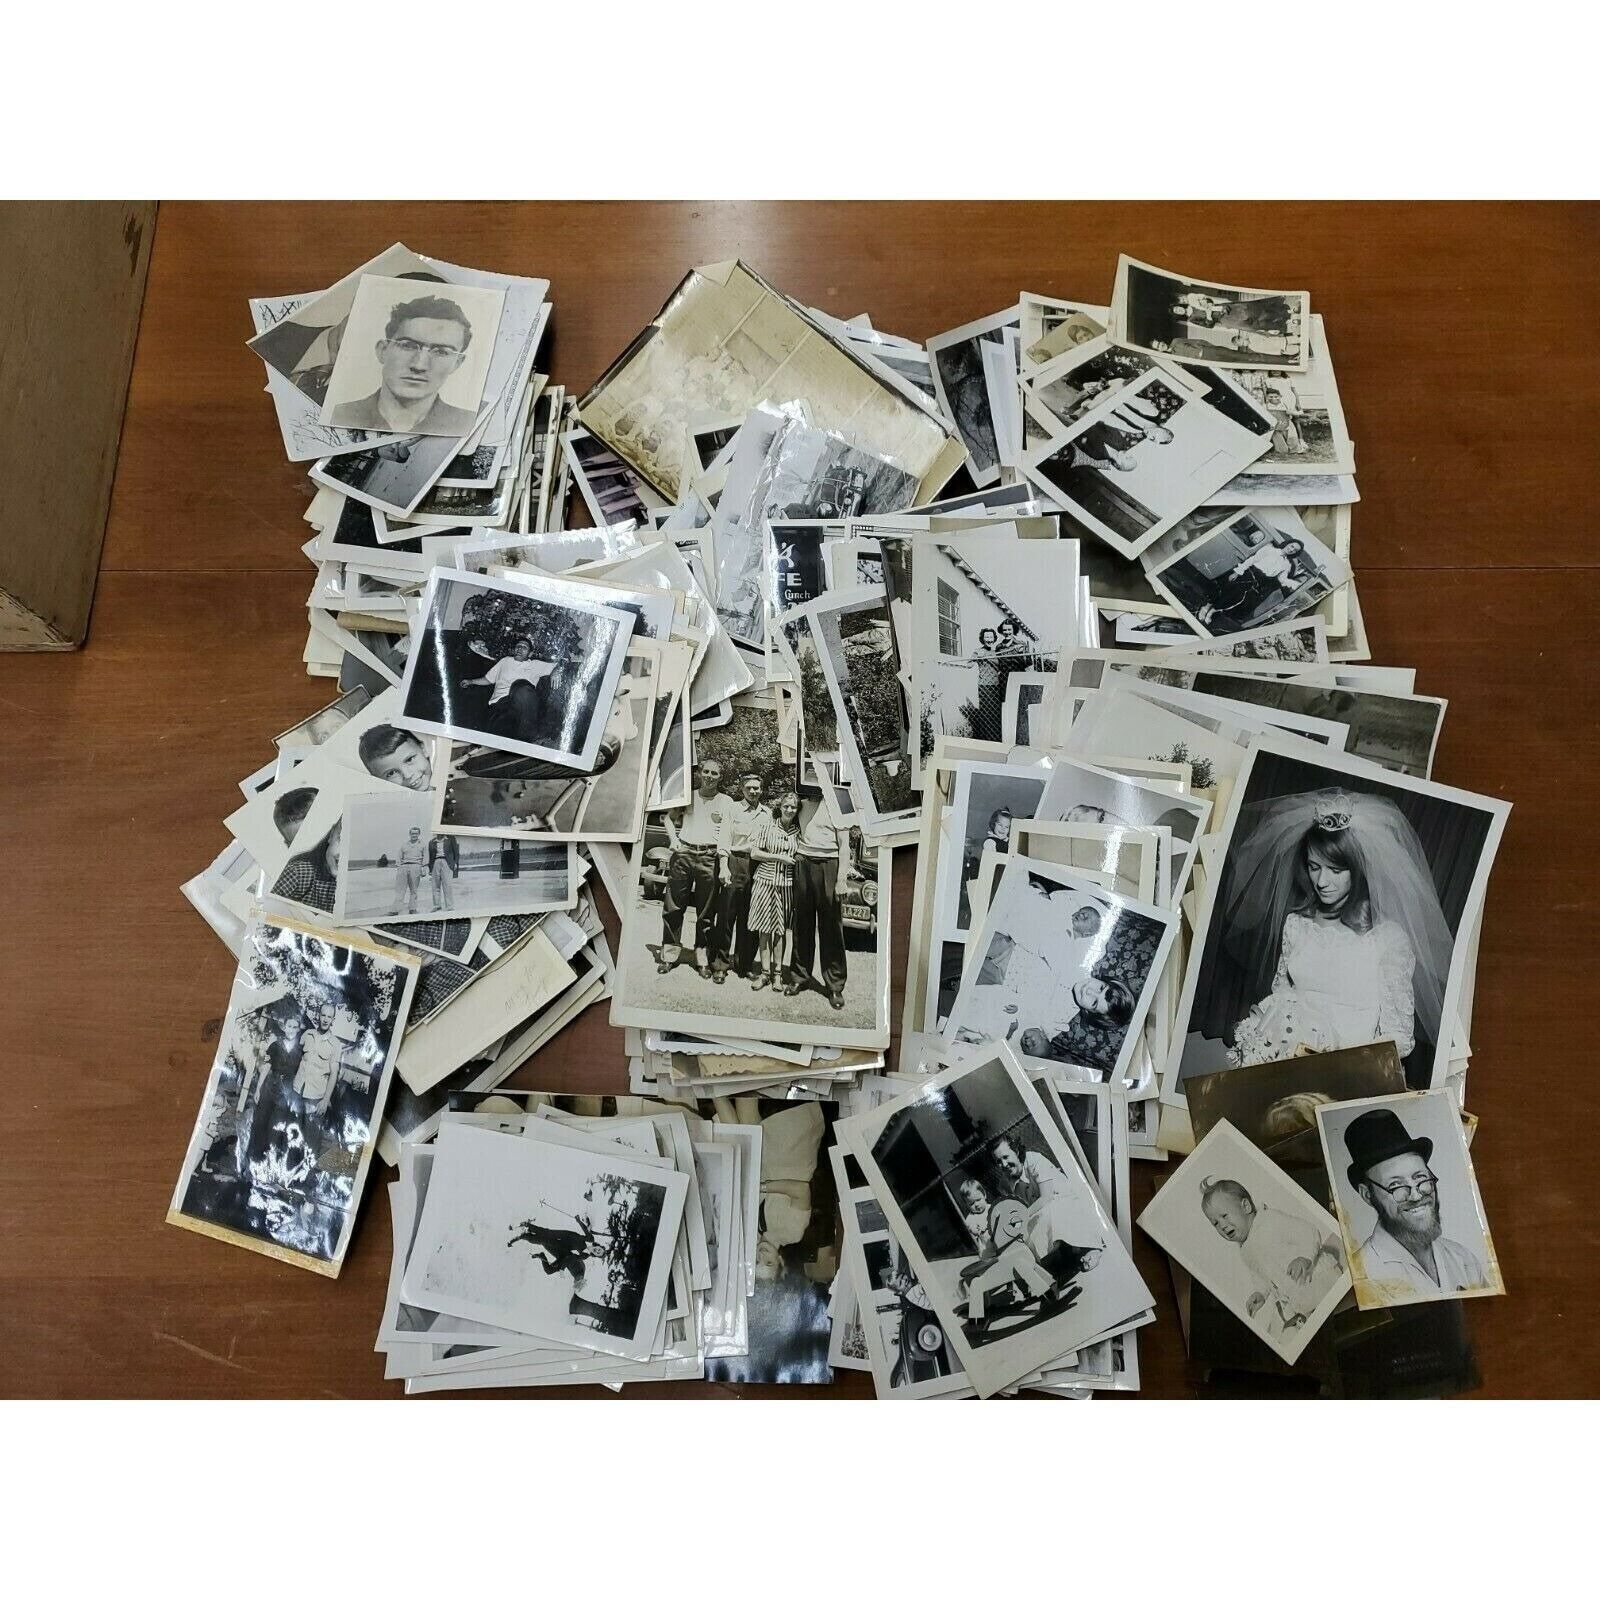 Lot OF 100 Original Random Found Old Photographs  B&W Vintage Snapshots Pictures